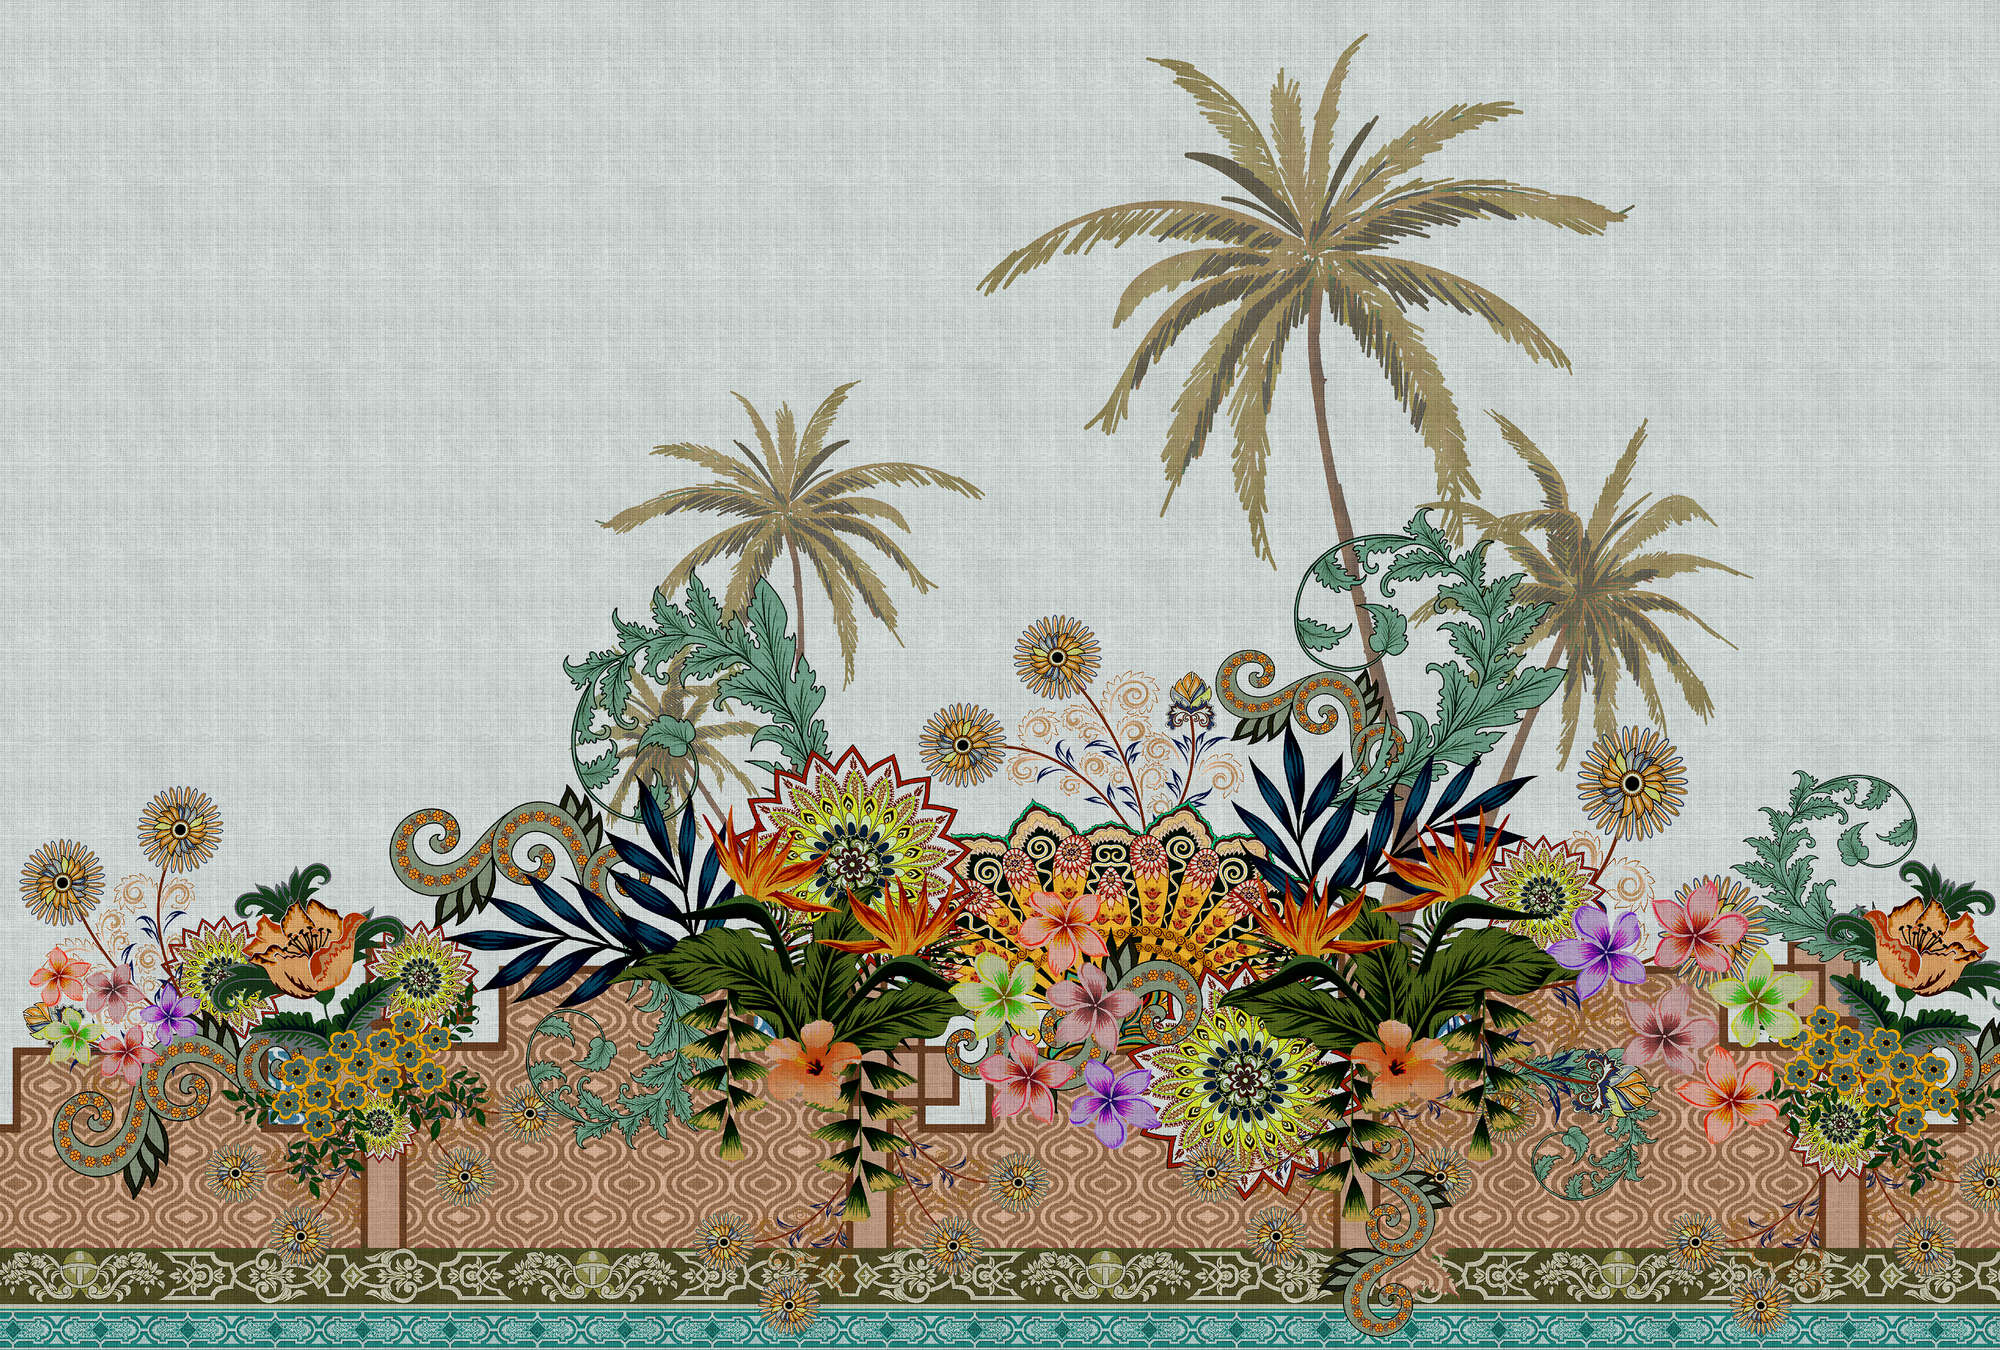             Oriental Garden 3 - papier peint fleurs jardin style indien
        